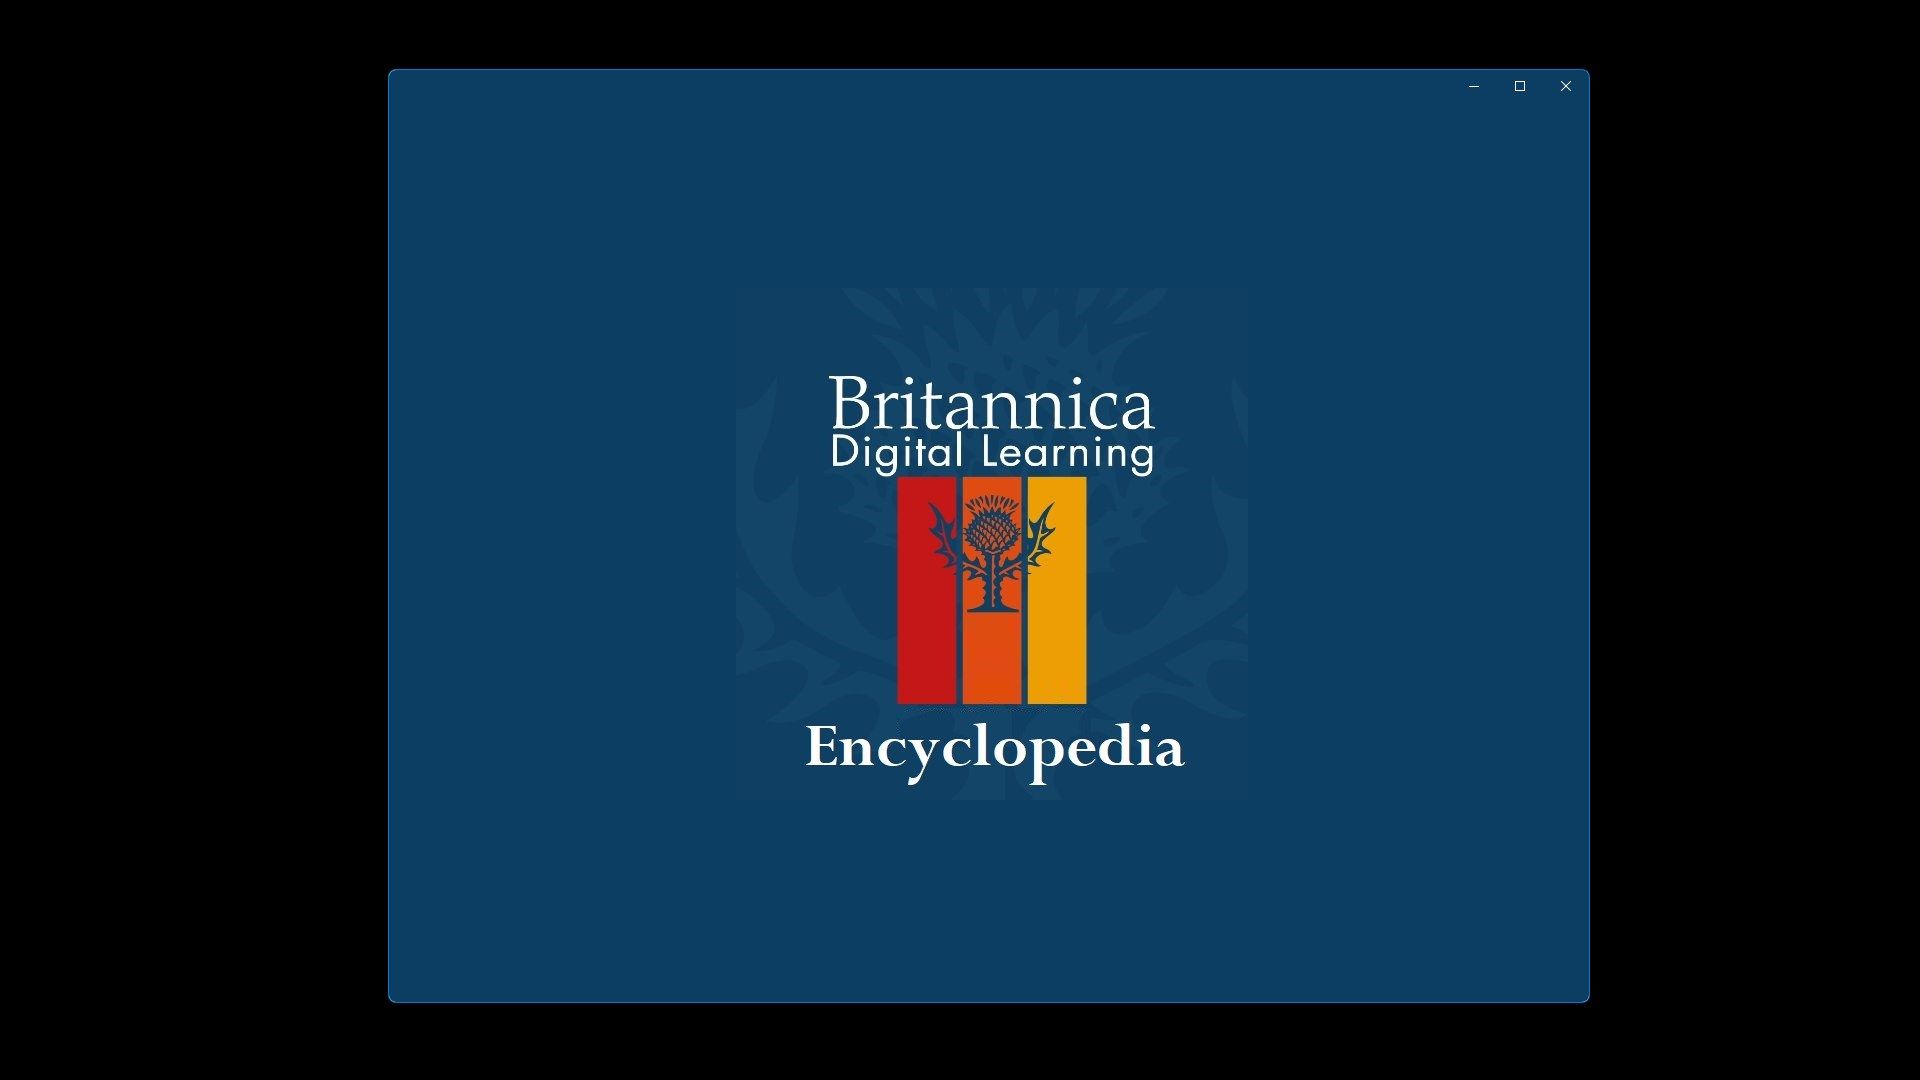 Britannica World Encyclopedia